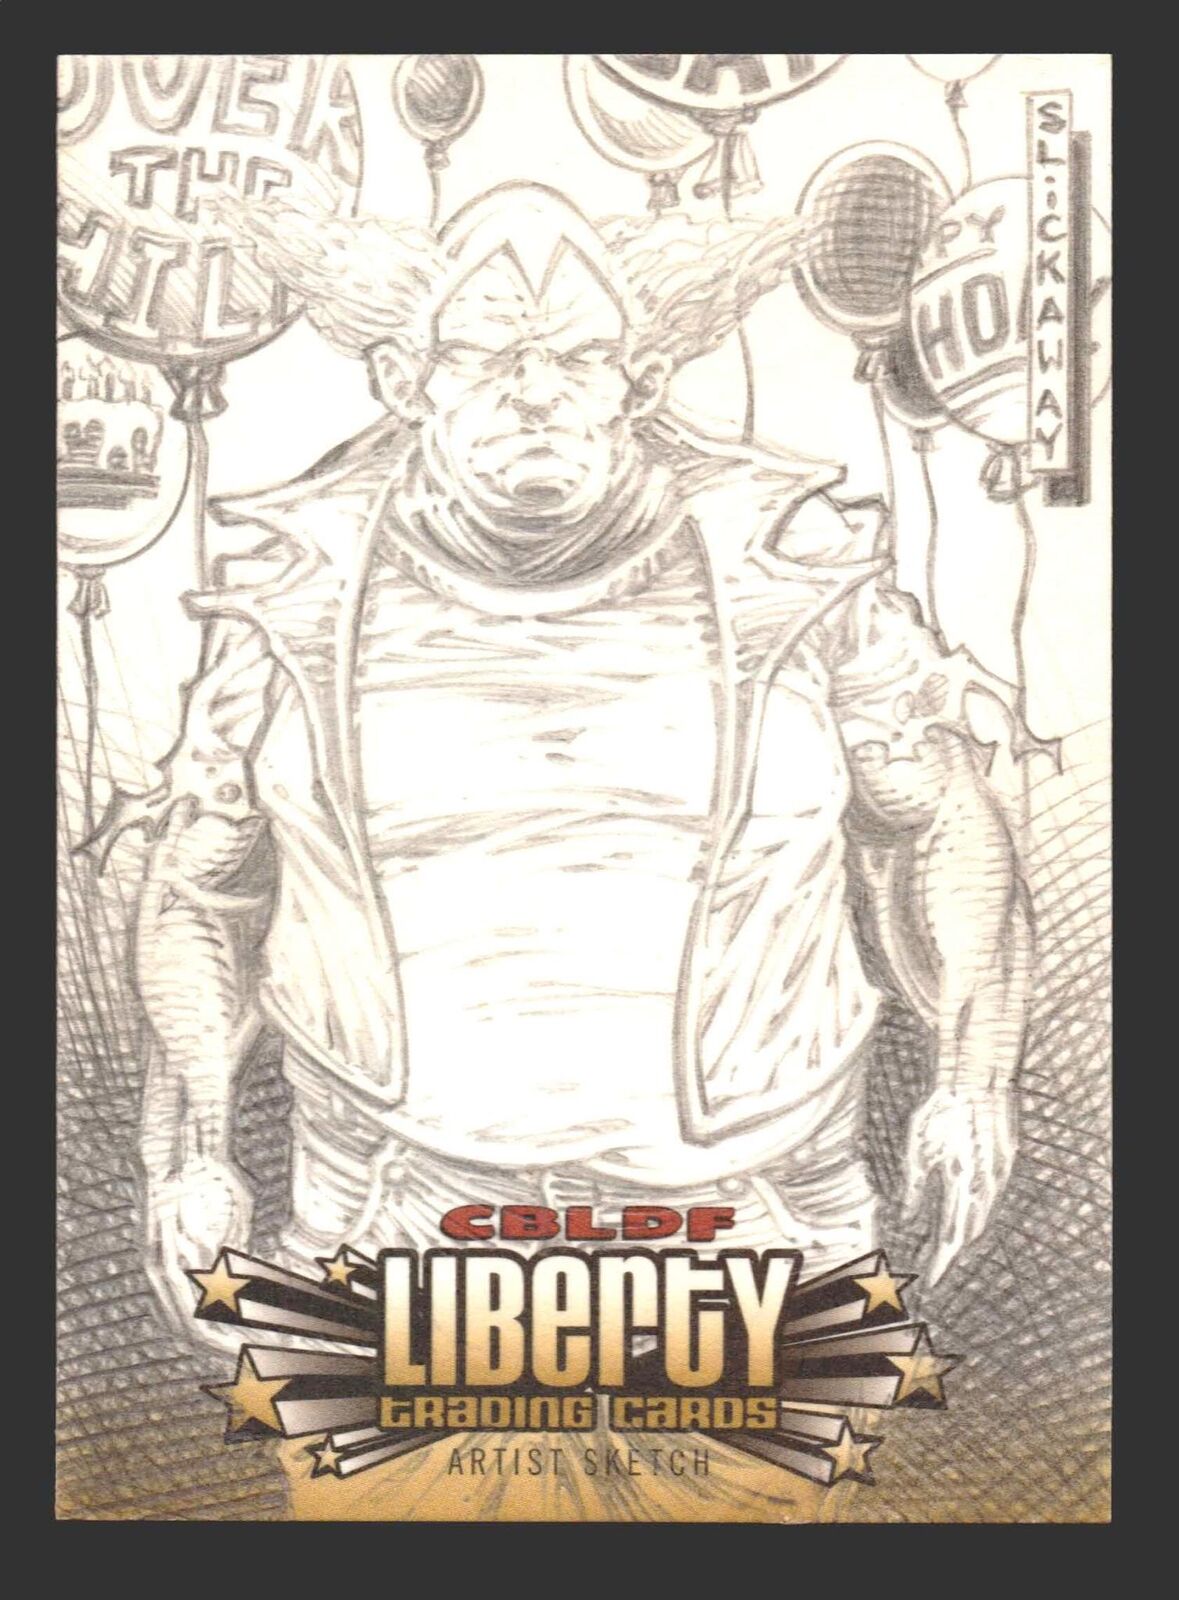 2011 Cryptozoic CBLDF Liberty Artist Sketch Card by Larry 'Slickaway' Schlekewy